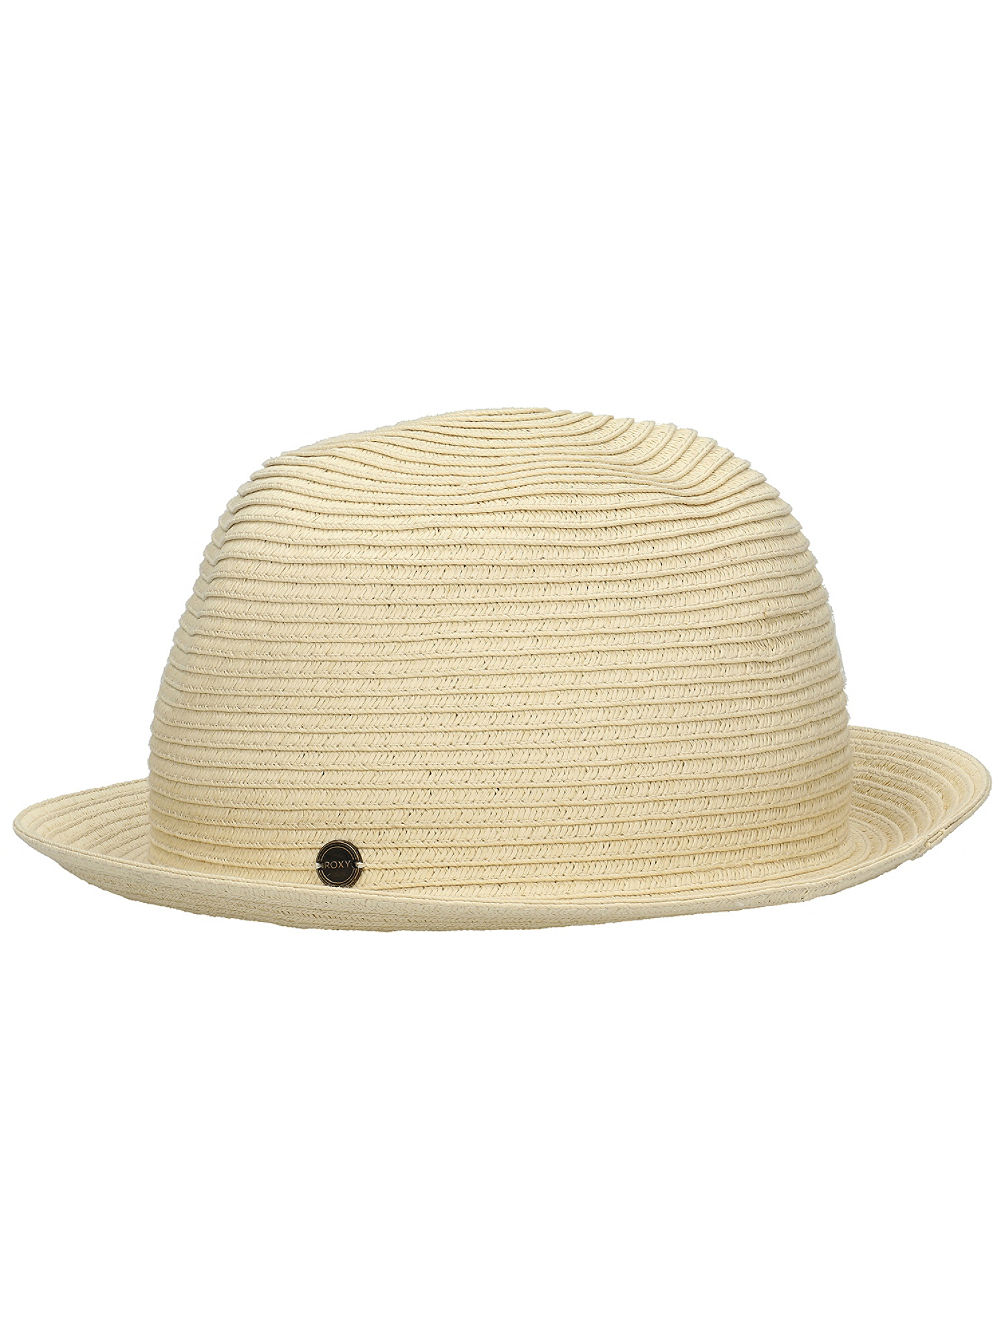 Summer Mood Hat